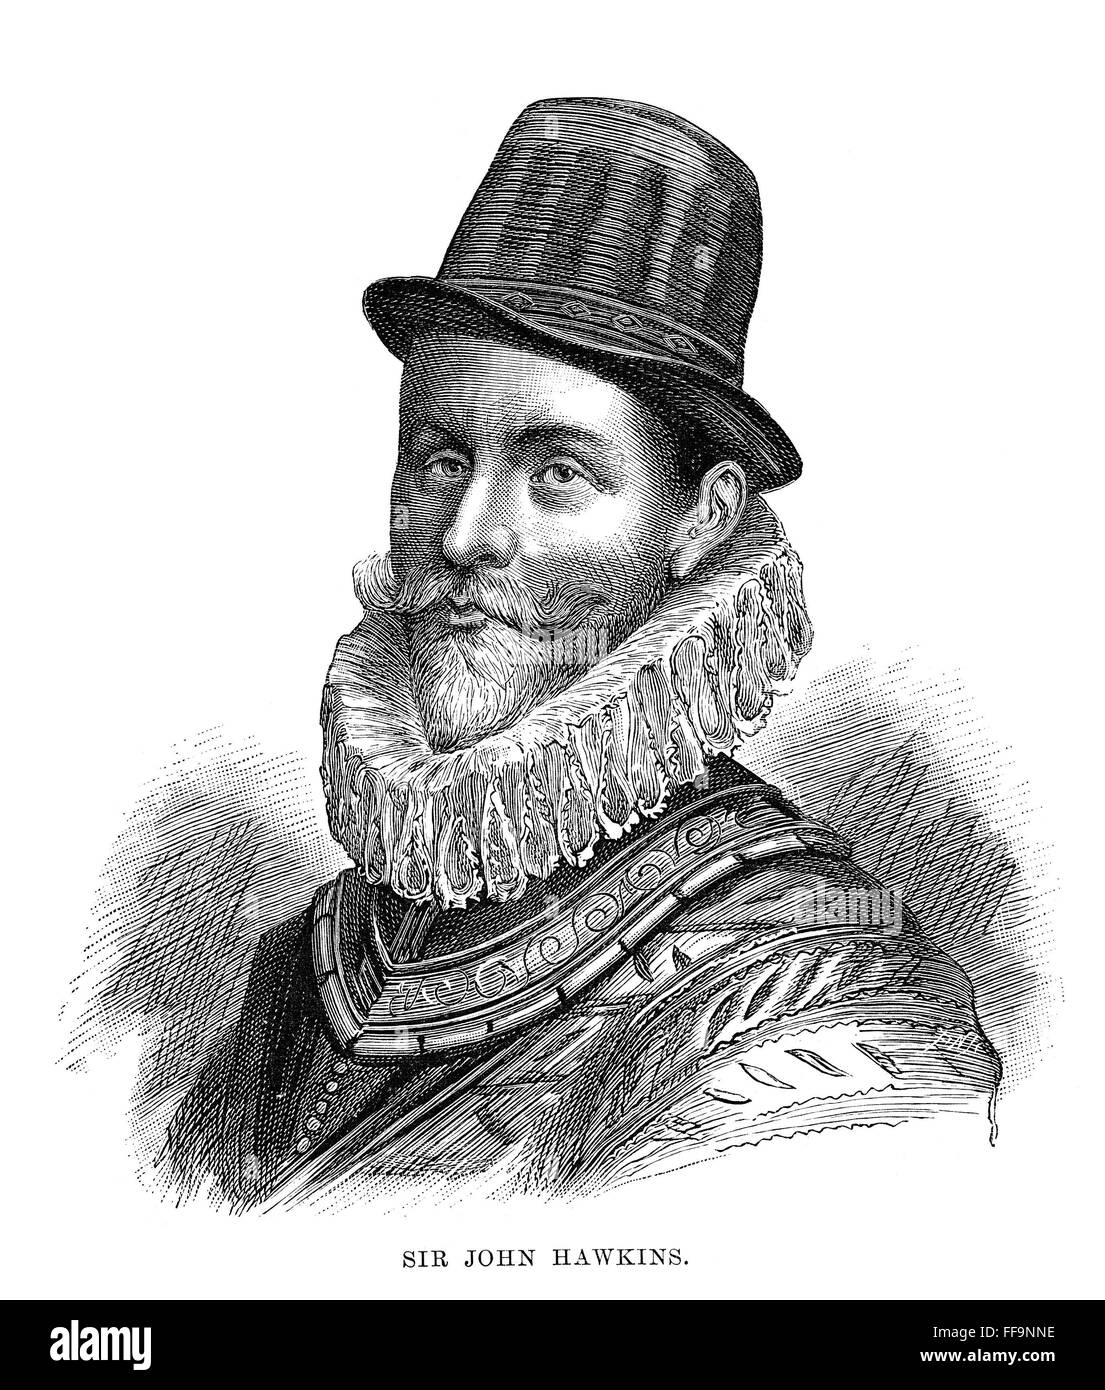 SIR JOHN HAWKINS (1532-1595). /nEnglish naval commander. Wood engraving, English, 1888. Stock Photo